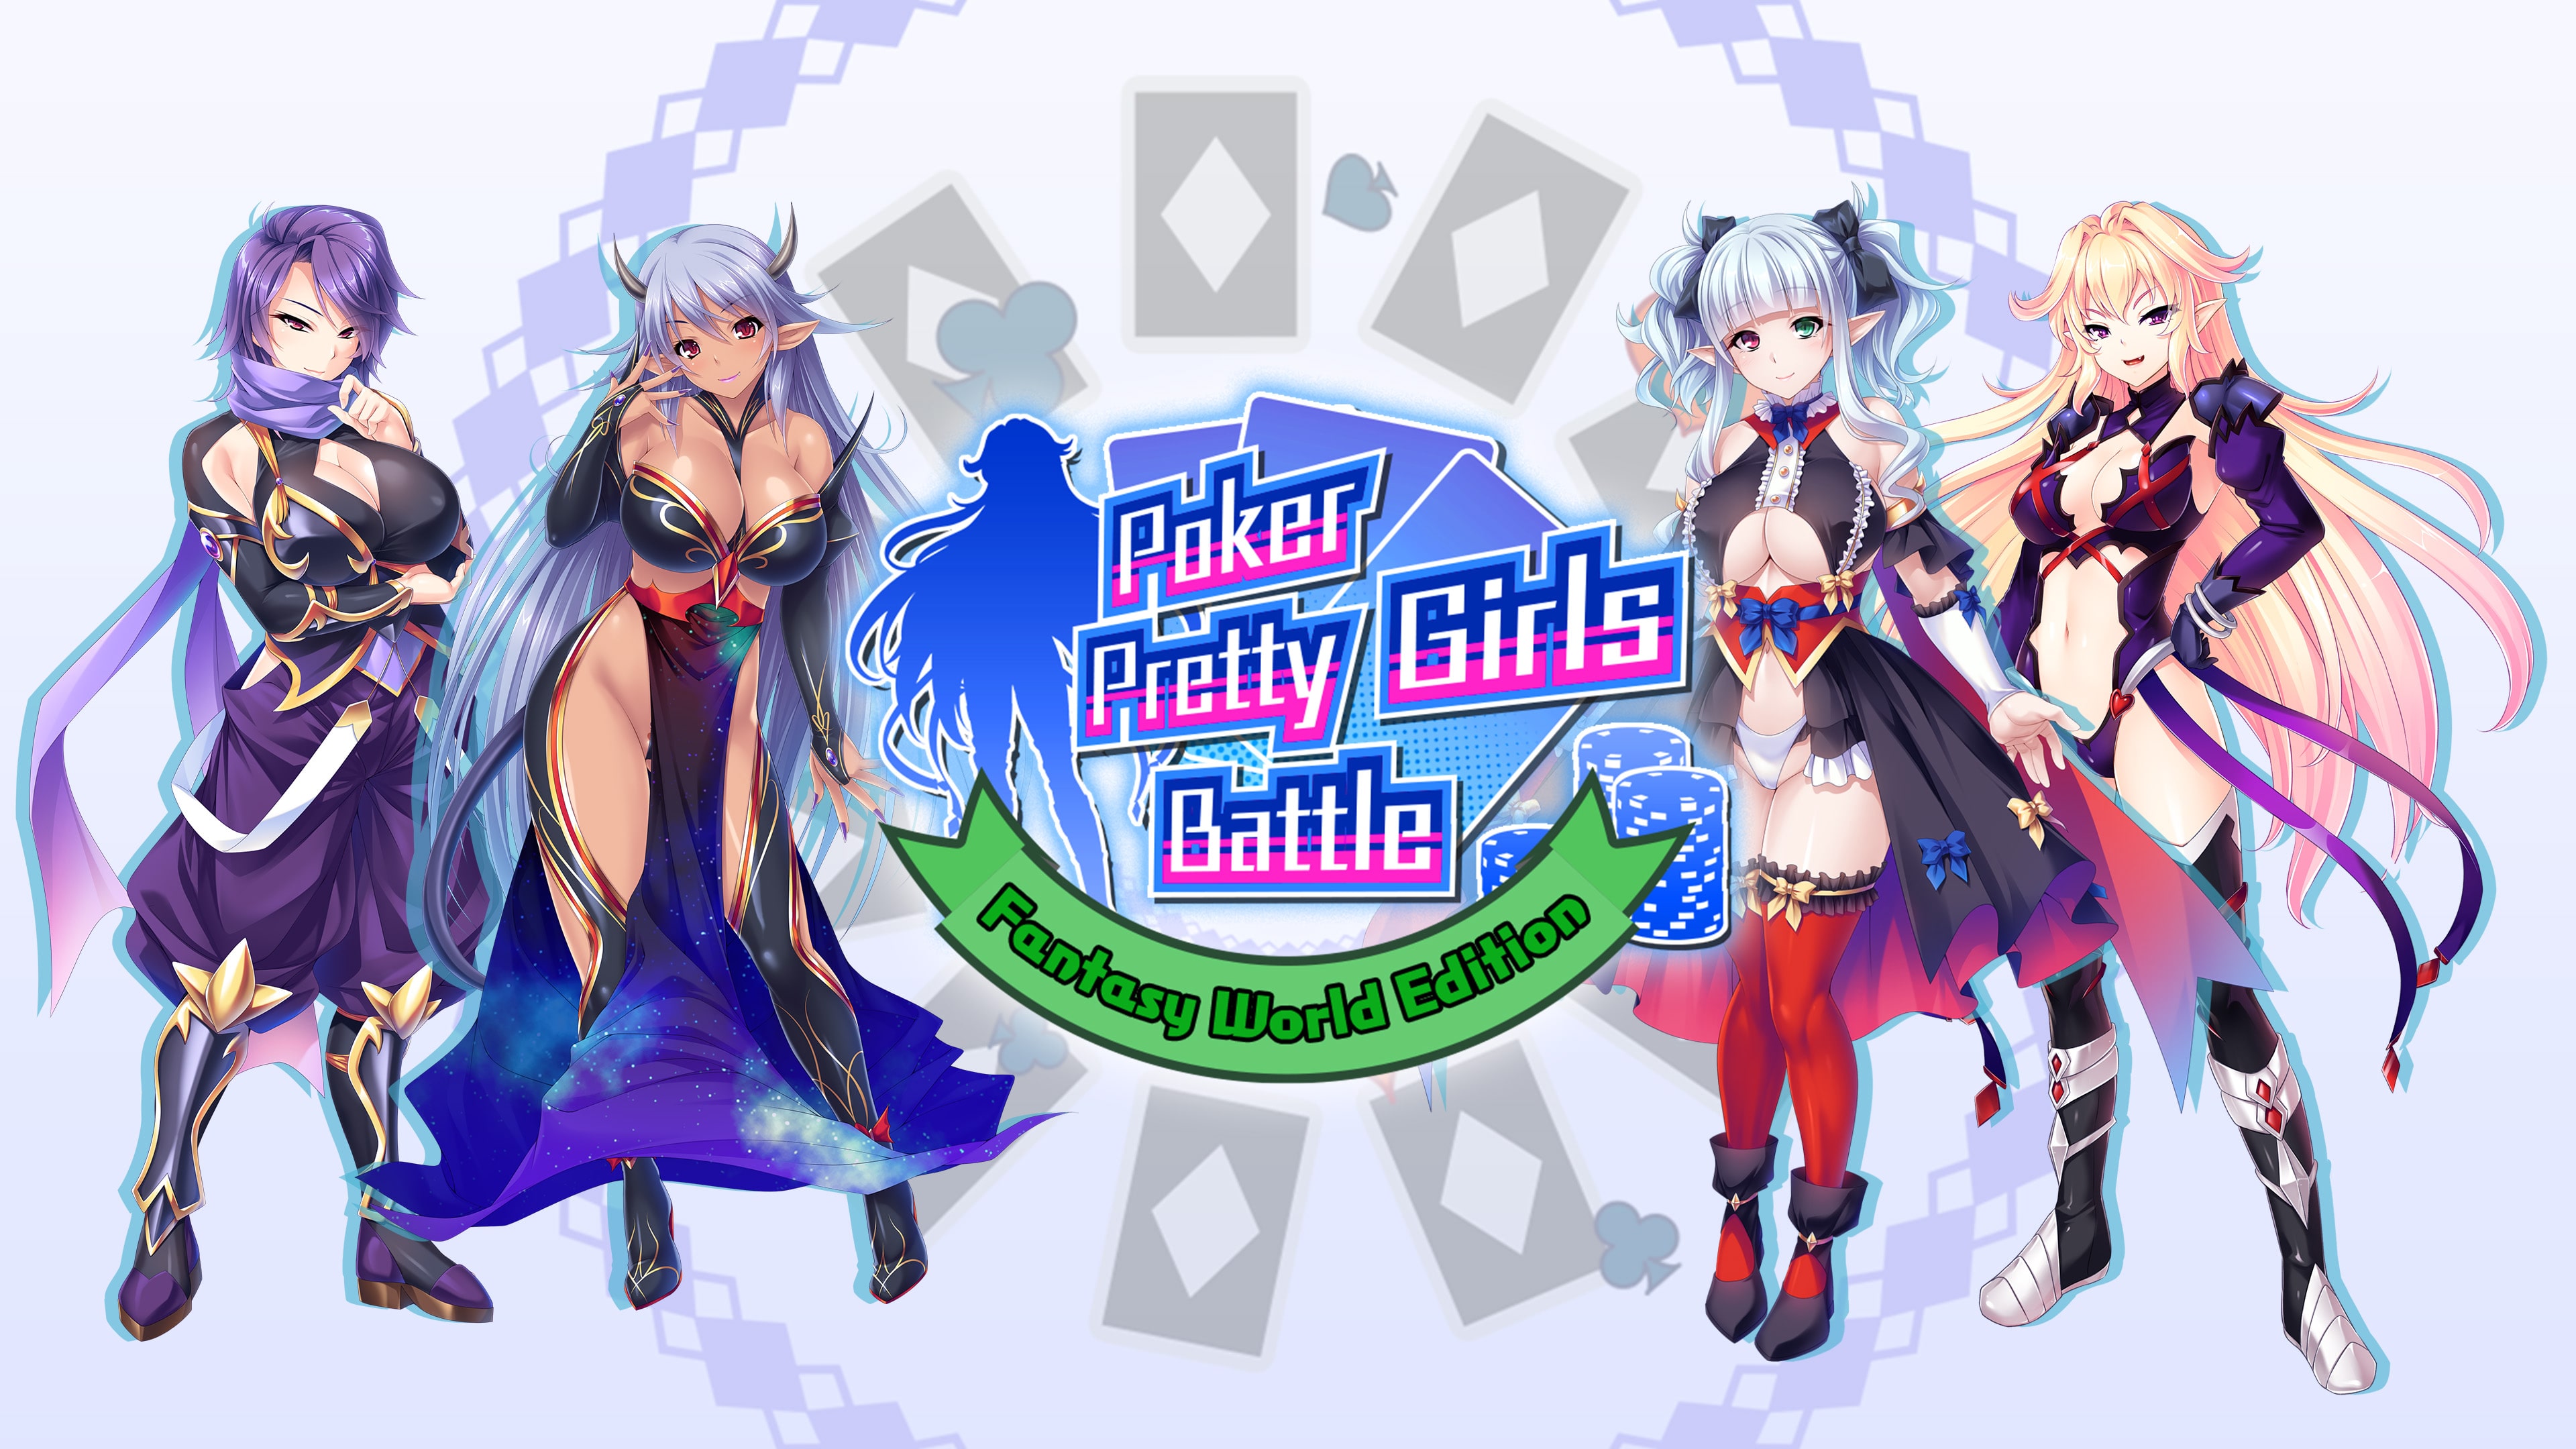 Poker Pretty Girls Battle: Fantasy World Edition (Simplified Chinese, English, Japanese, Traditional Chinese)